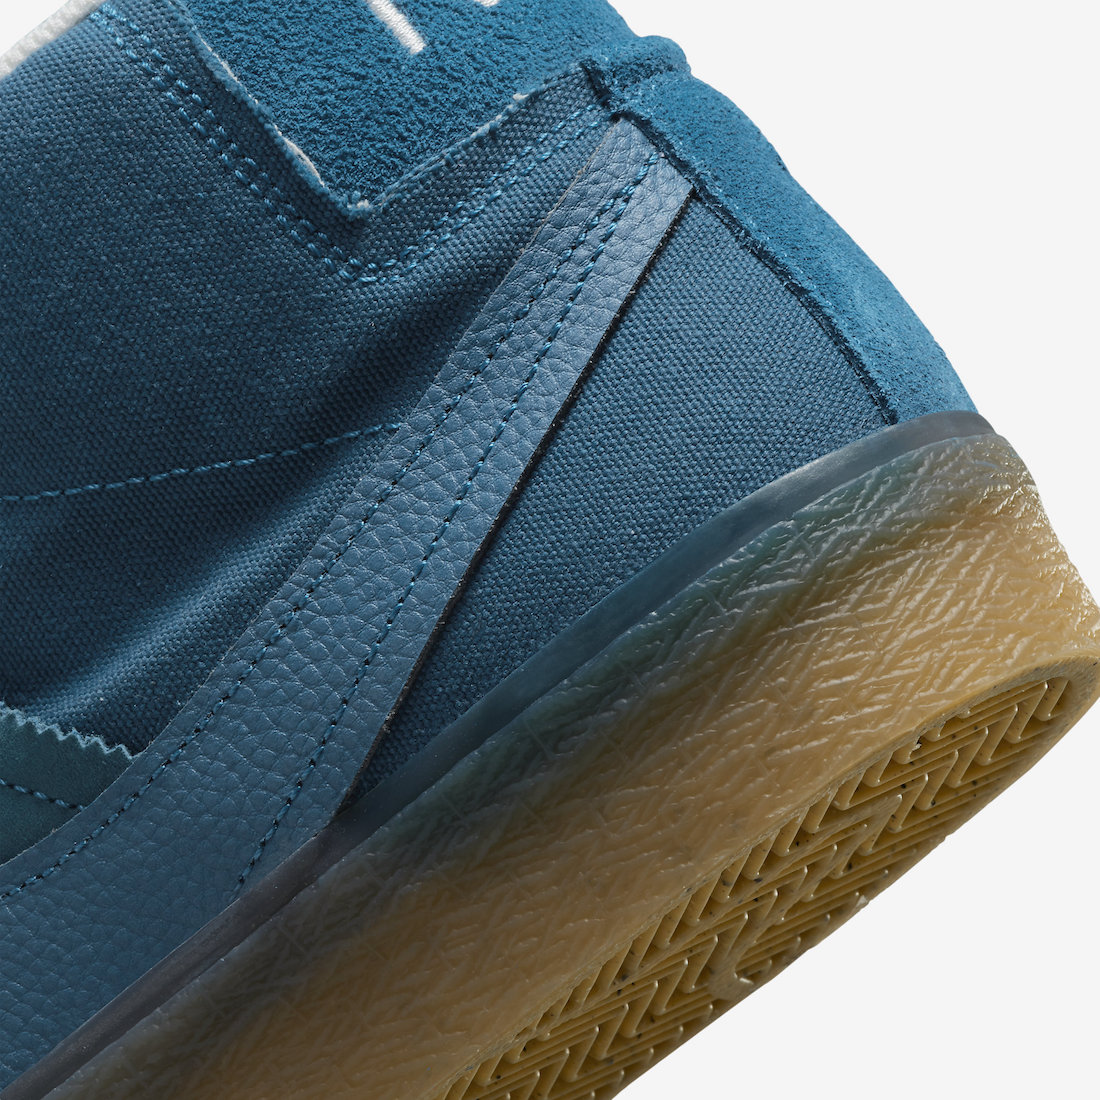 Nike SB Blazer Mid Teal Gum DV5468-300 Release Date